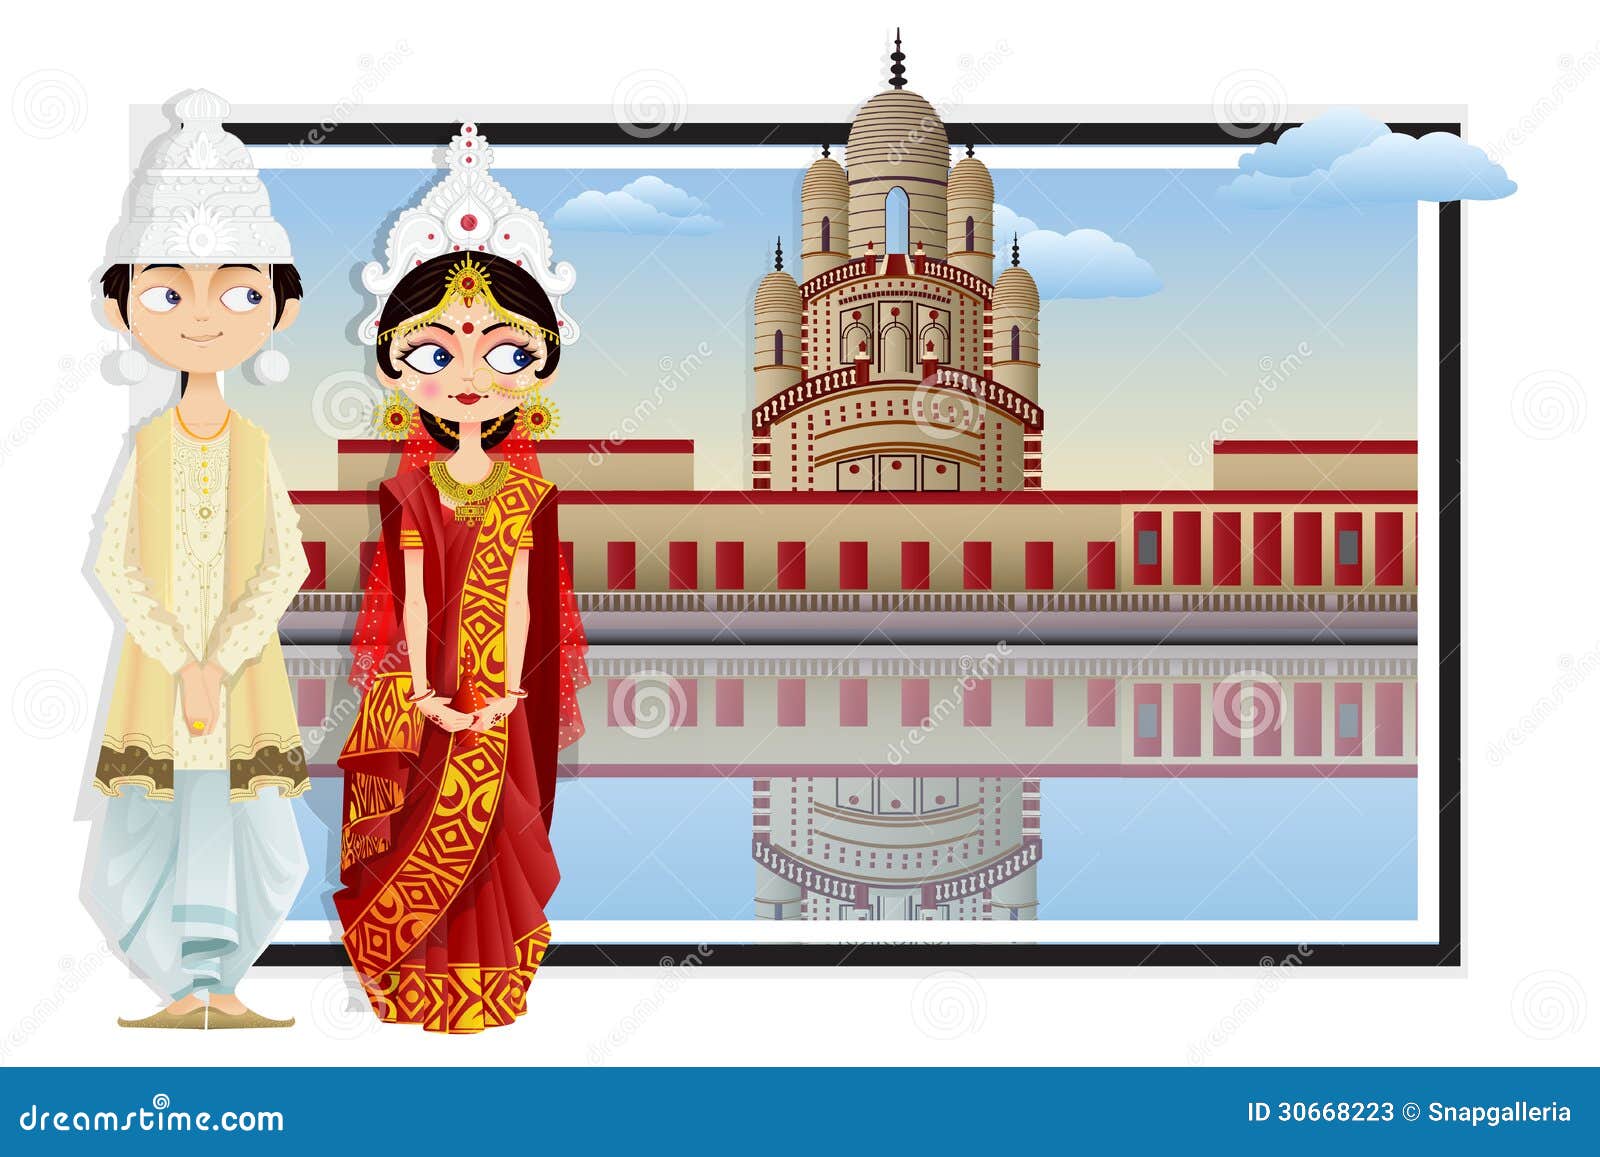 Bengali Couple Stock Illustrations – 52 Bengali Couple Stock Illustrations,  Vectors & Clipart - Dreamstime